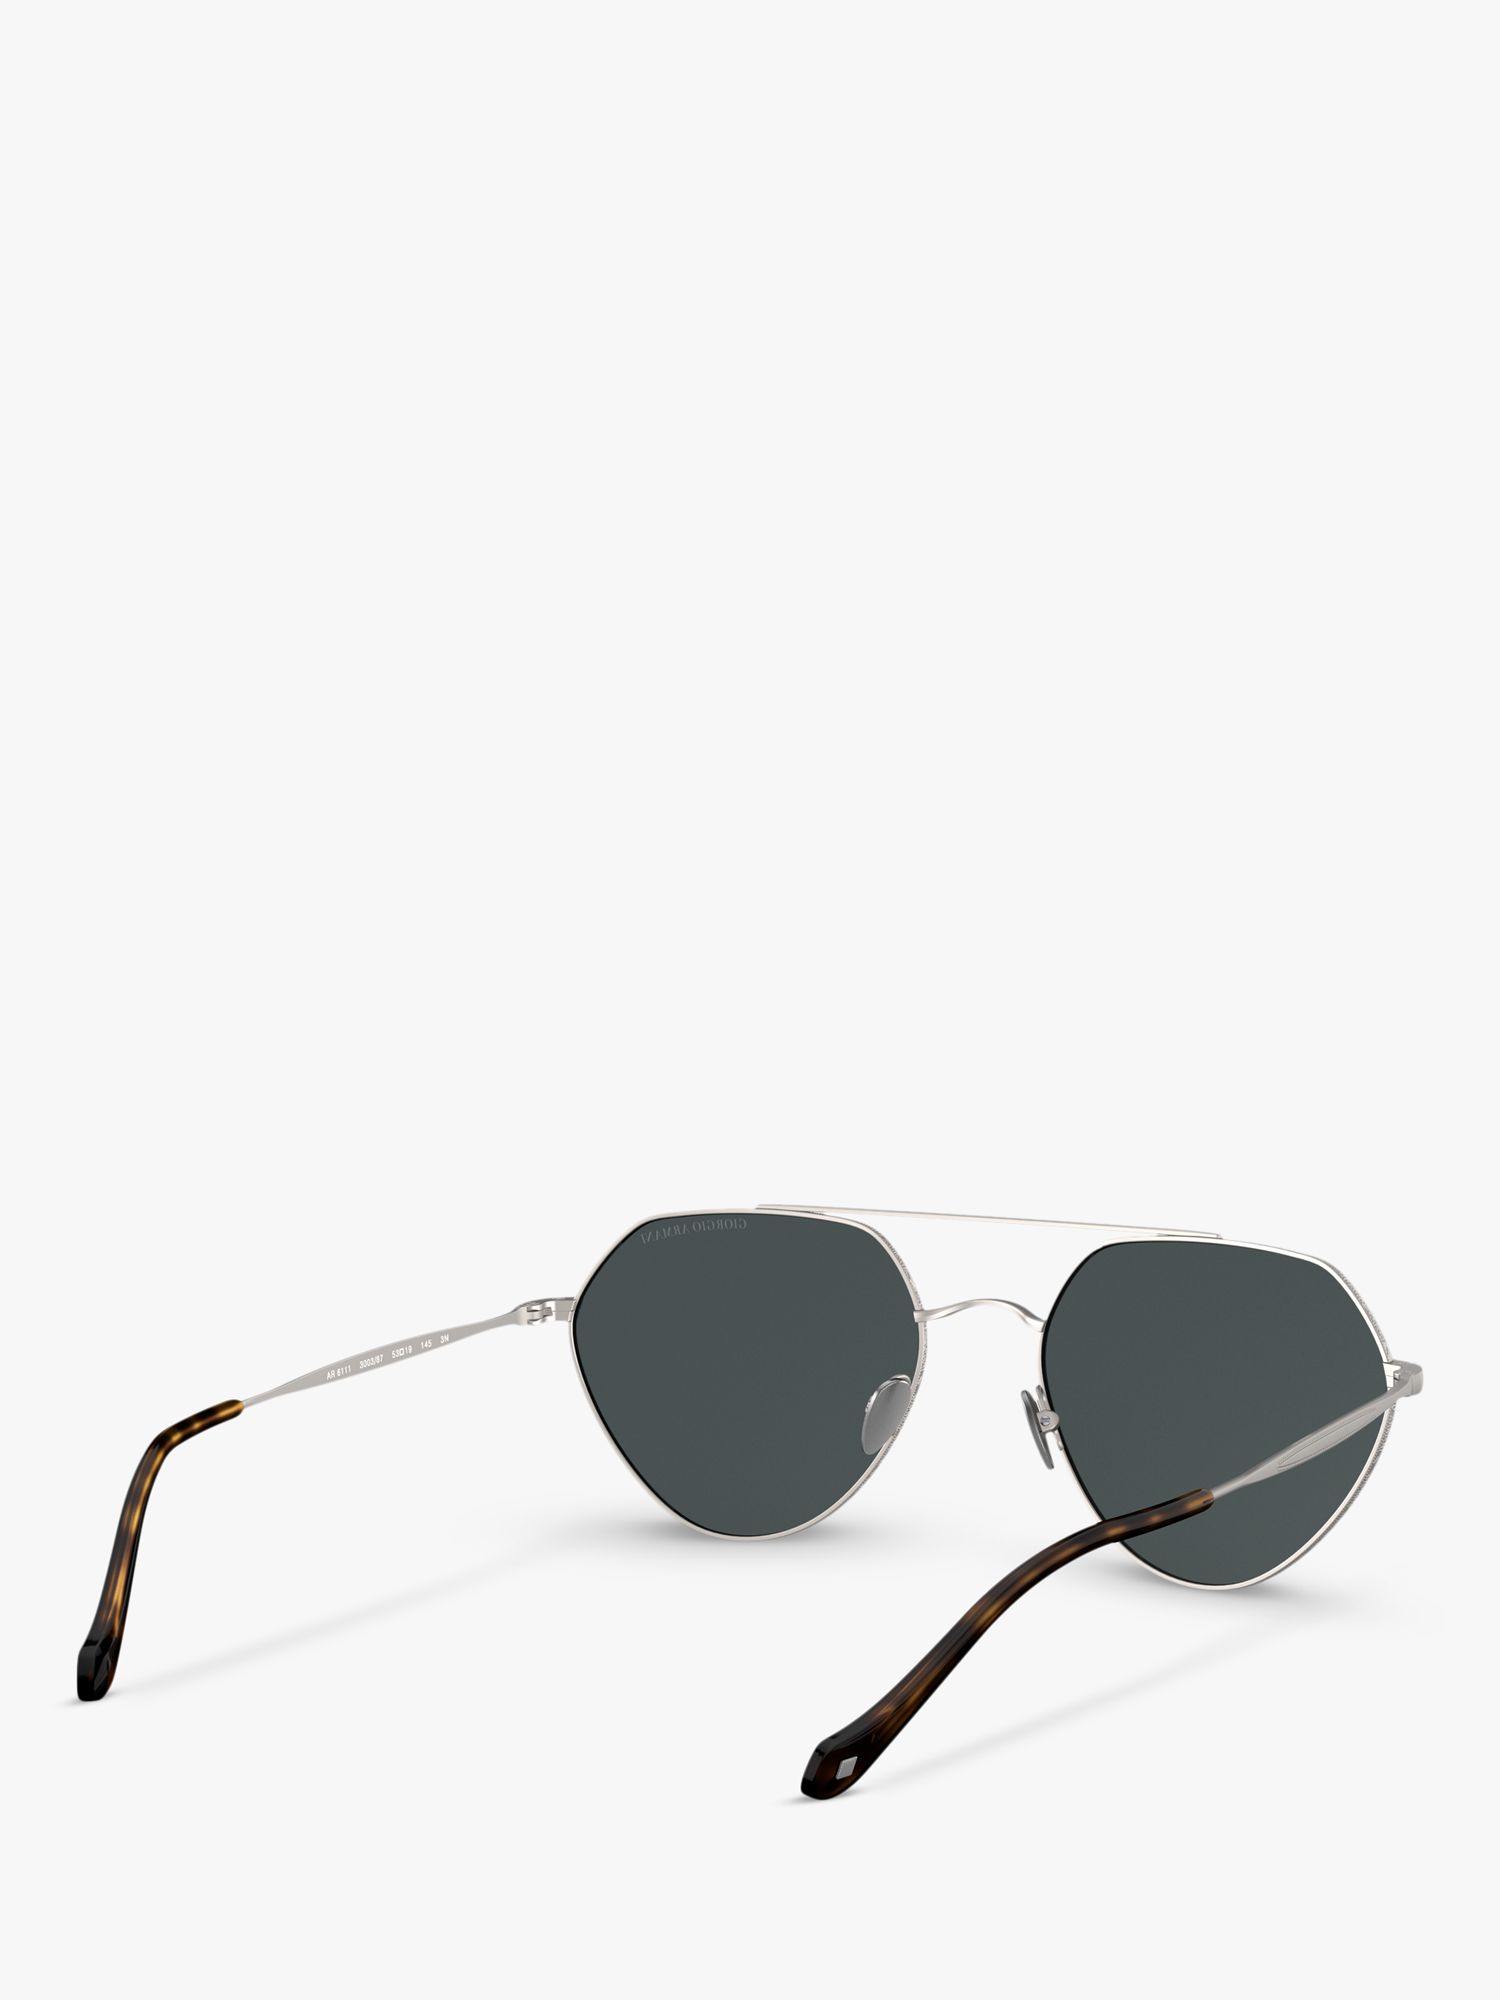 Giorgio Armani AR6111 Women's Irregular Sunglasses, Matte Gunmetal/Grey